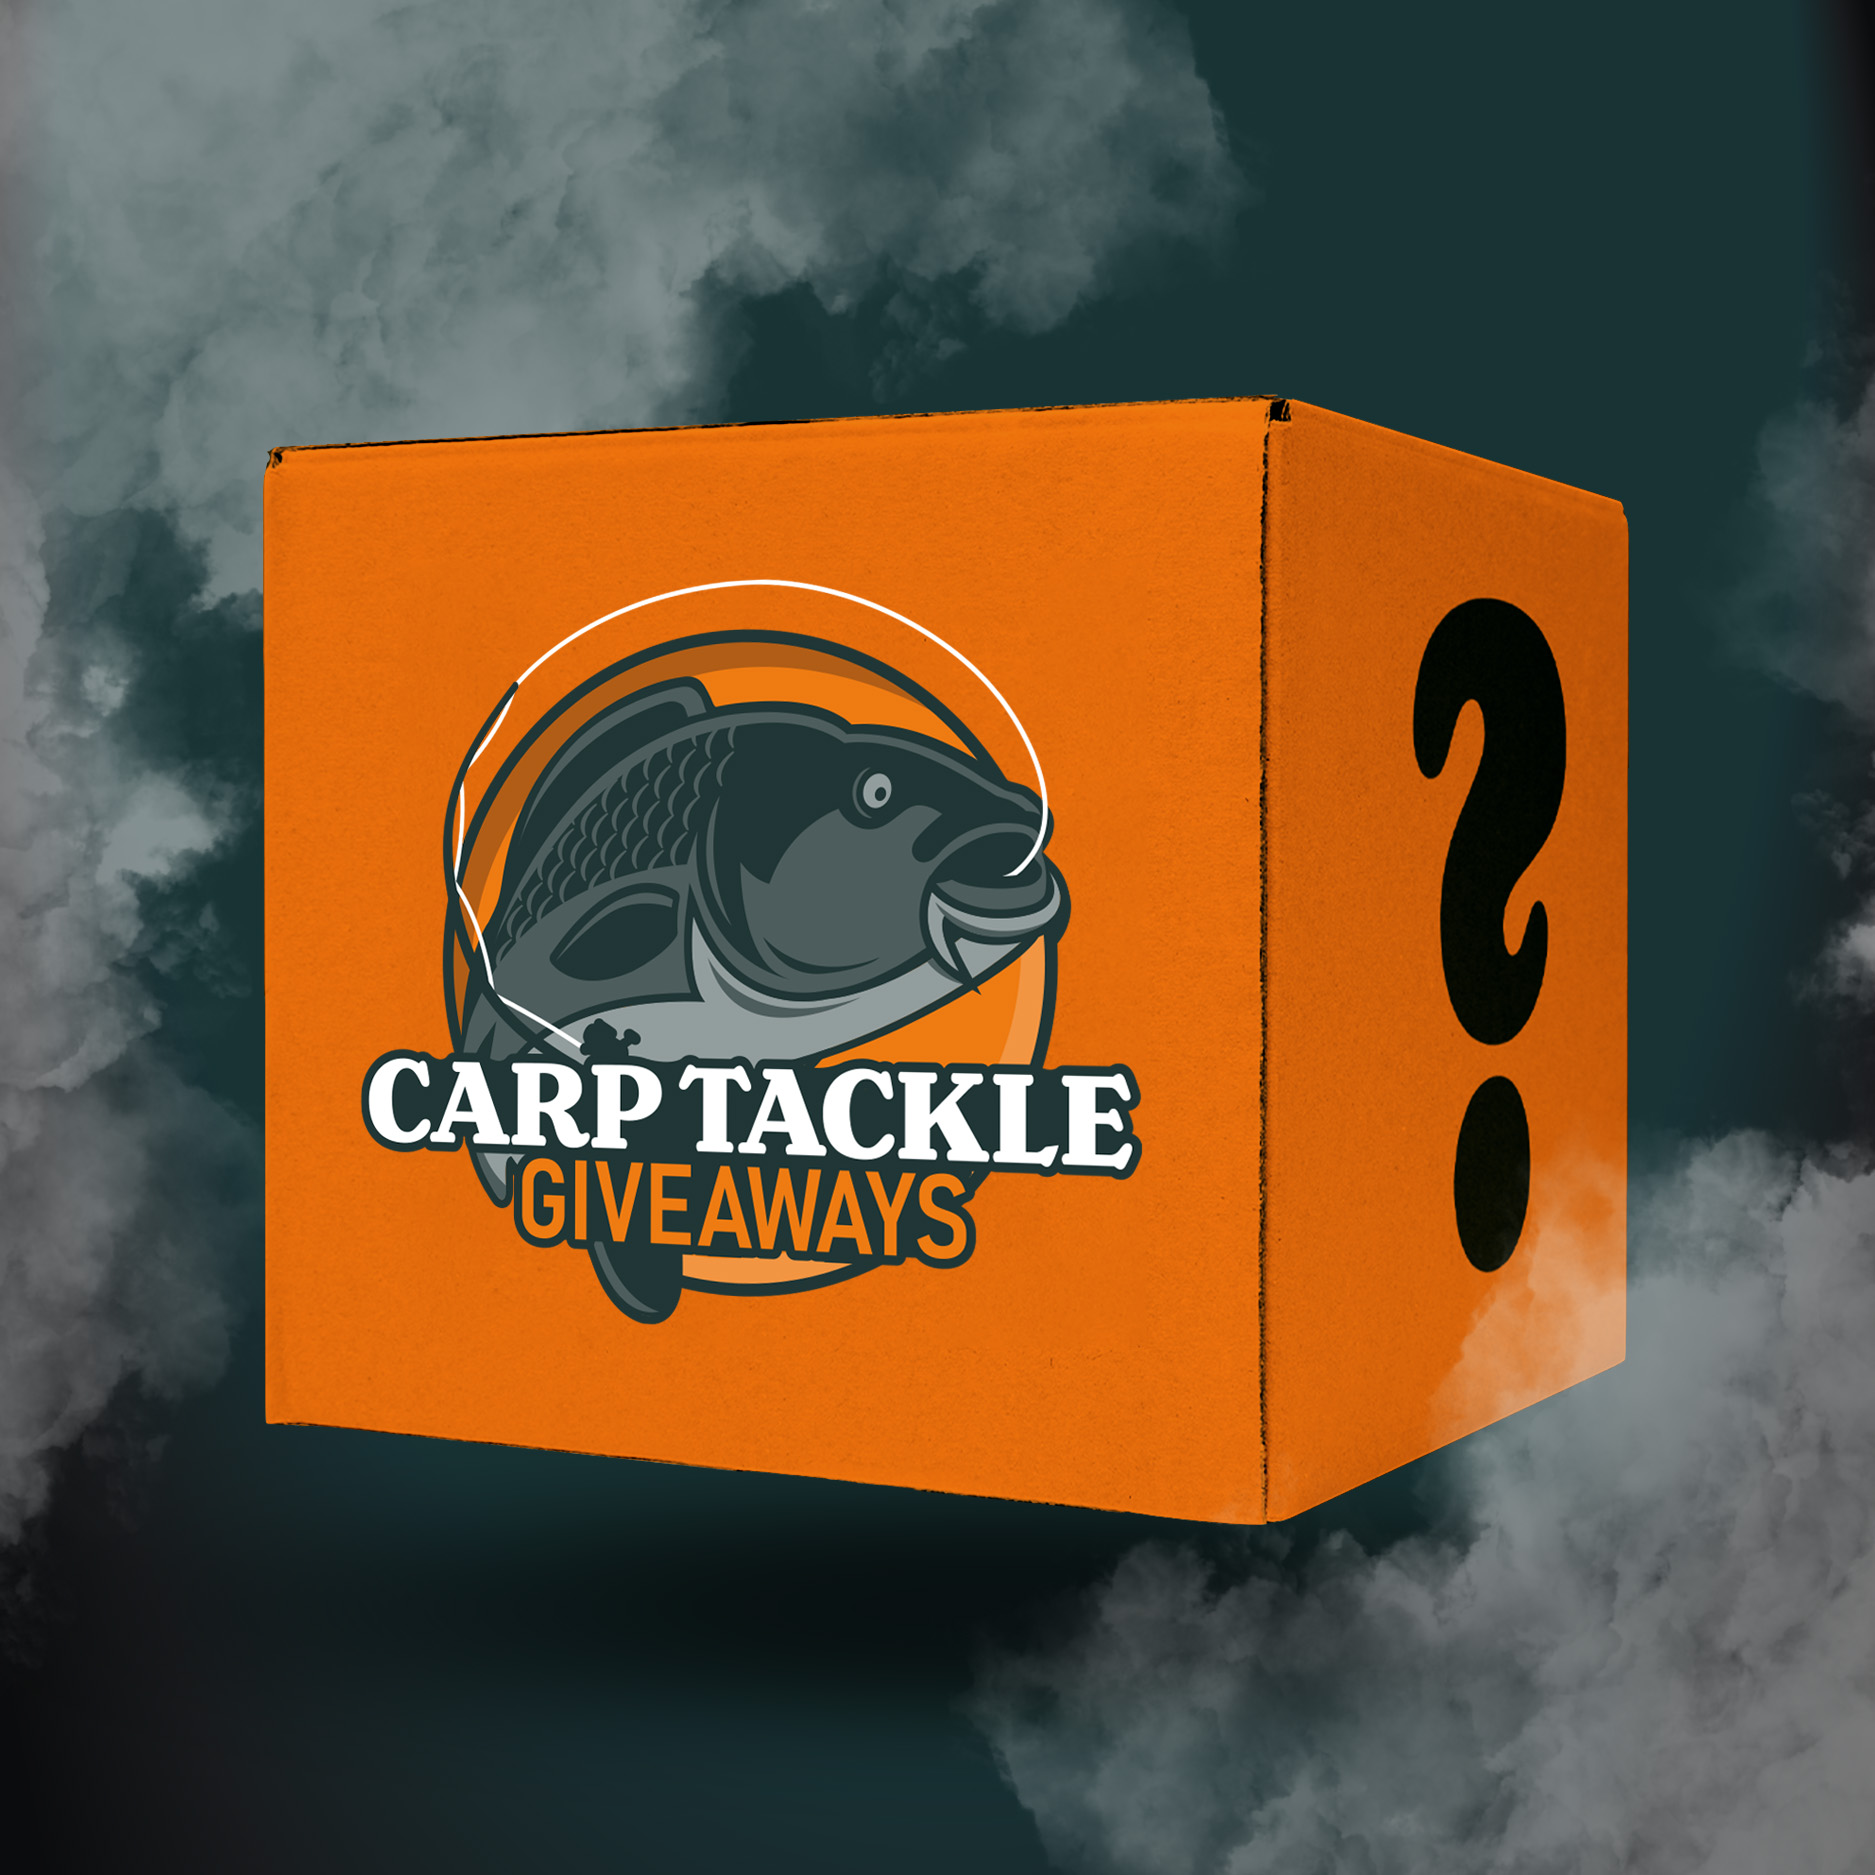 https://carptacklegiveaways.co.uk/wp-content/uploads/2021/02/Carp-Tackle-Giveaways_Mystery-Box.jpg